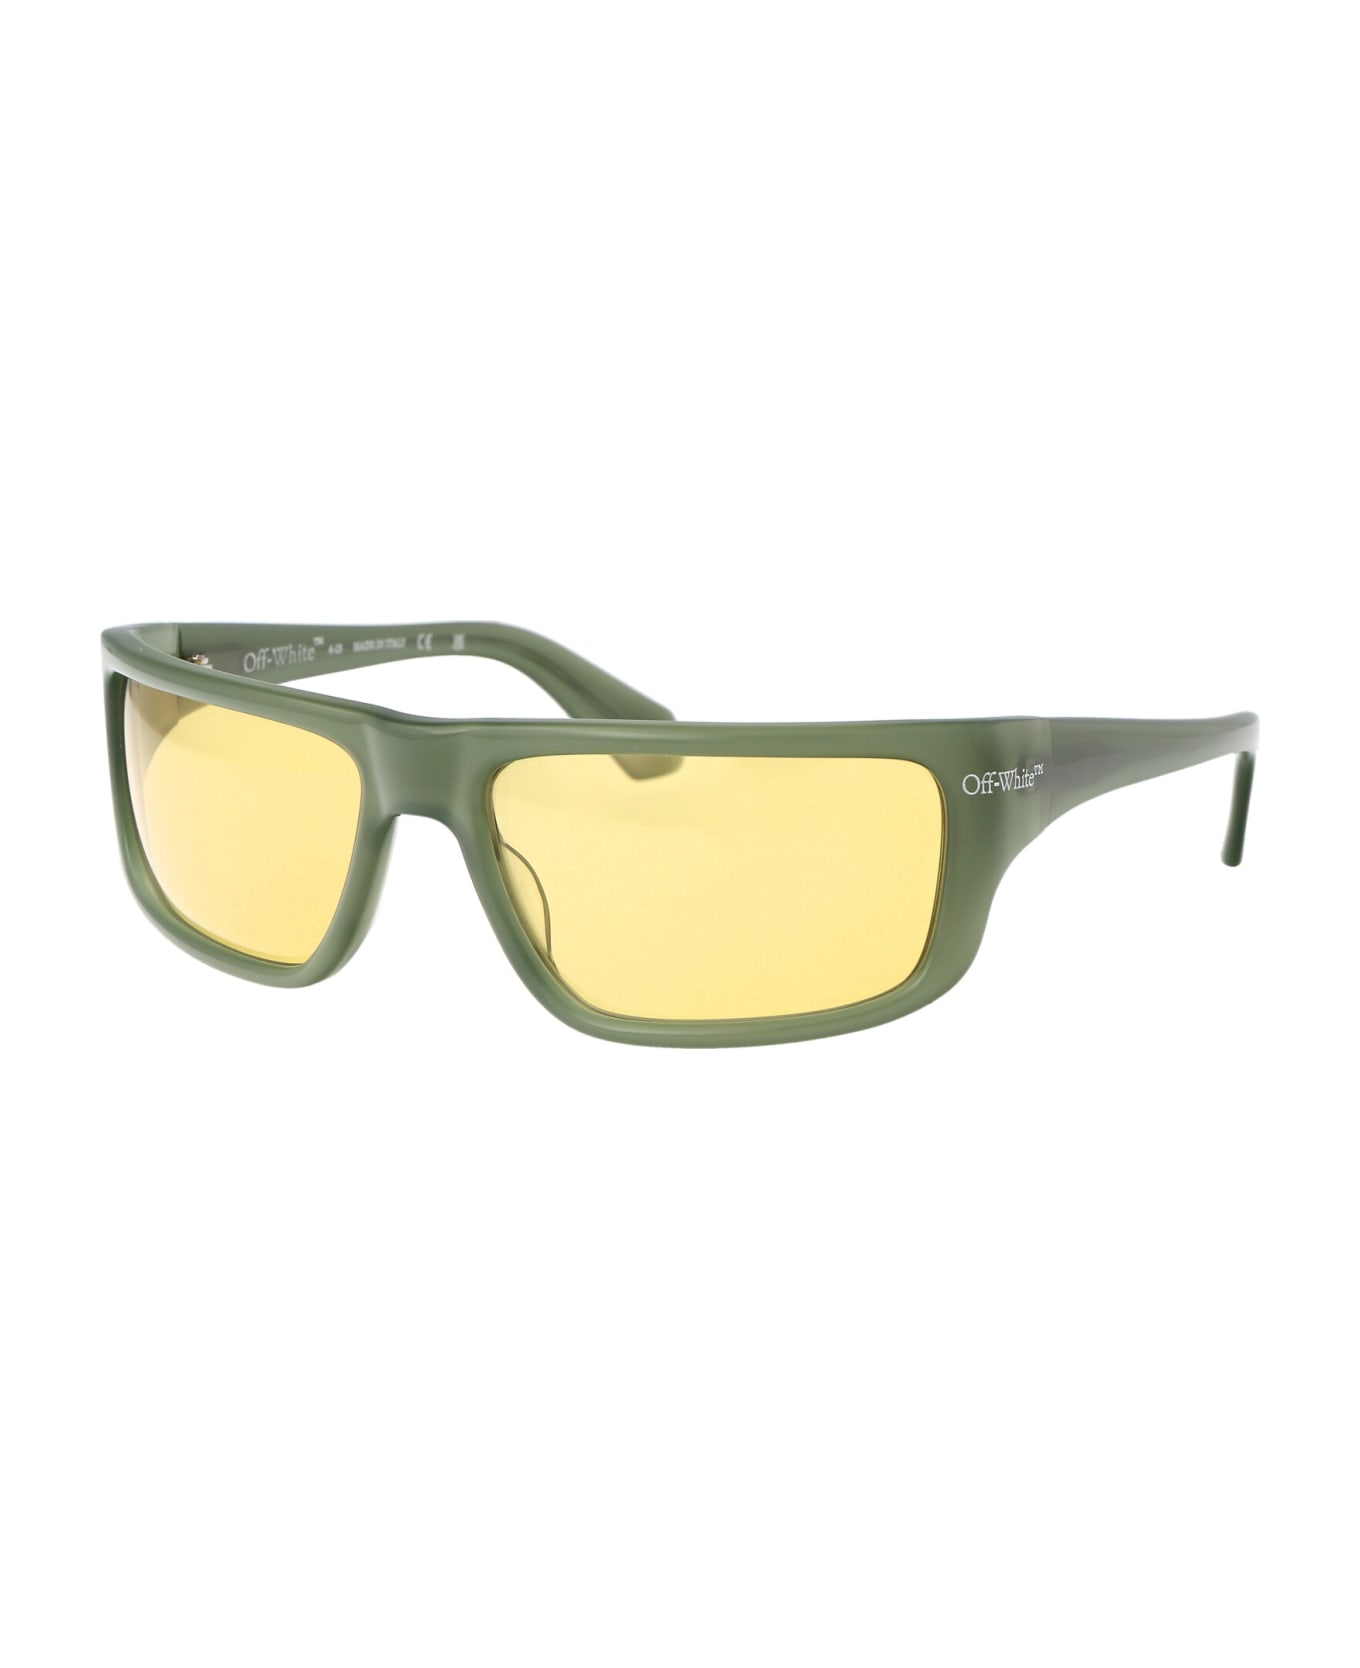 Off-White Bologna Sunglasses - 5518 SAGE GREEN サングラス